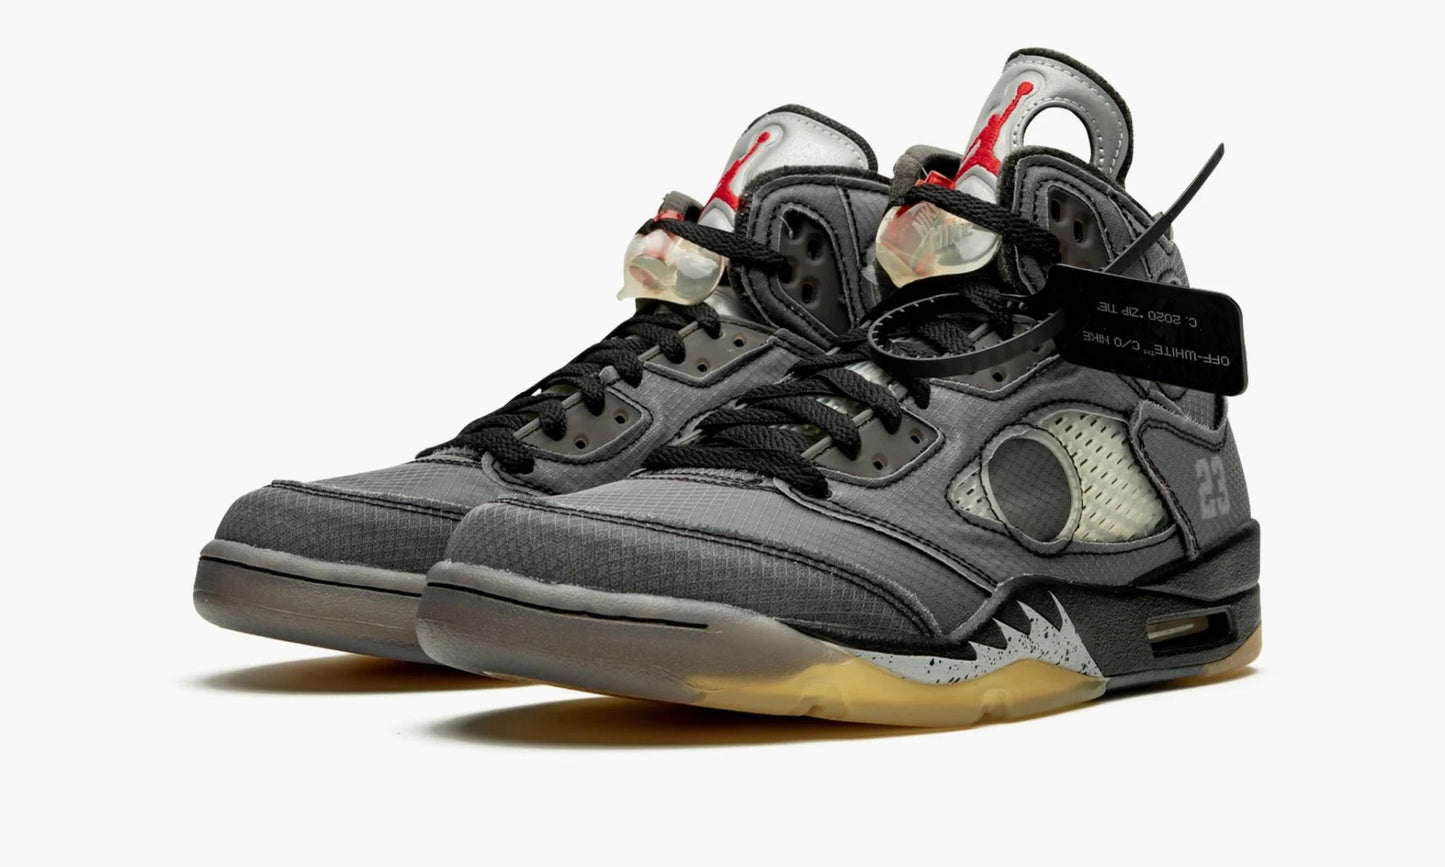 Nike Air Jordan 5 Retro "Off-White Black" - CT8480 001 | Grailshop